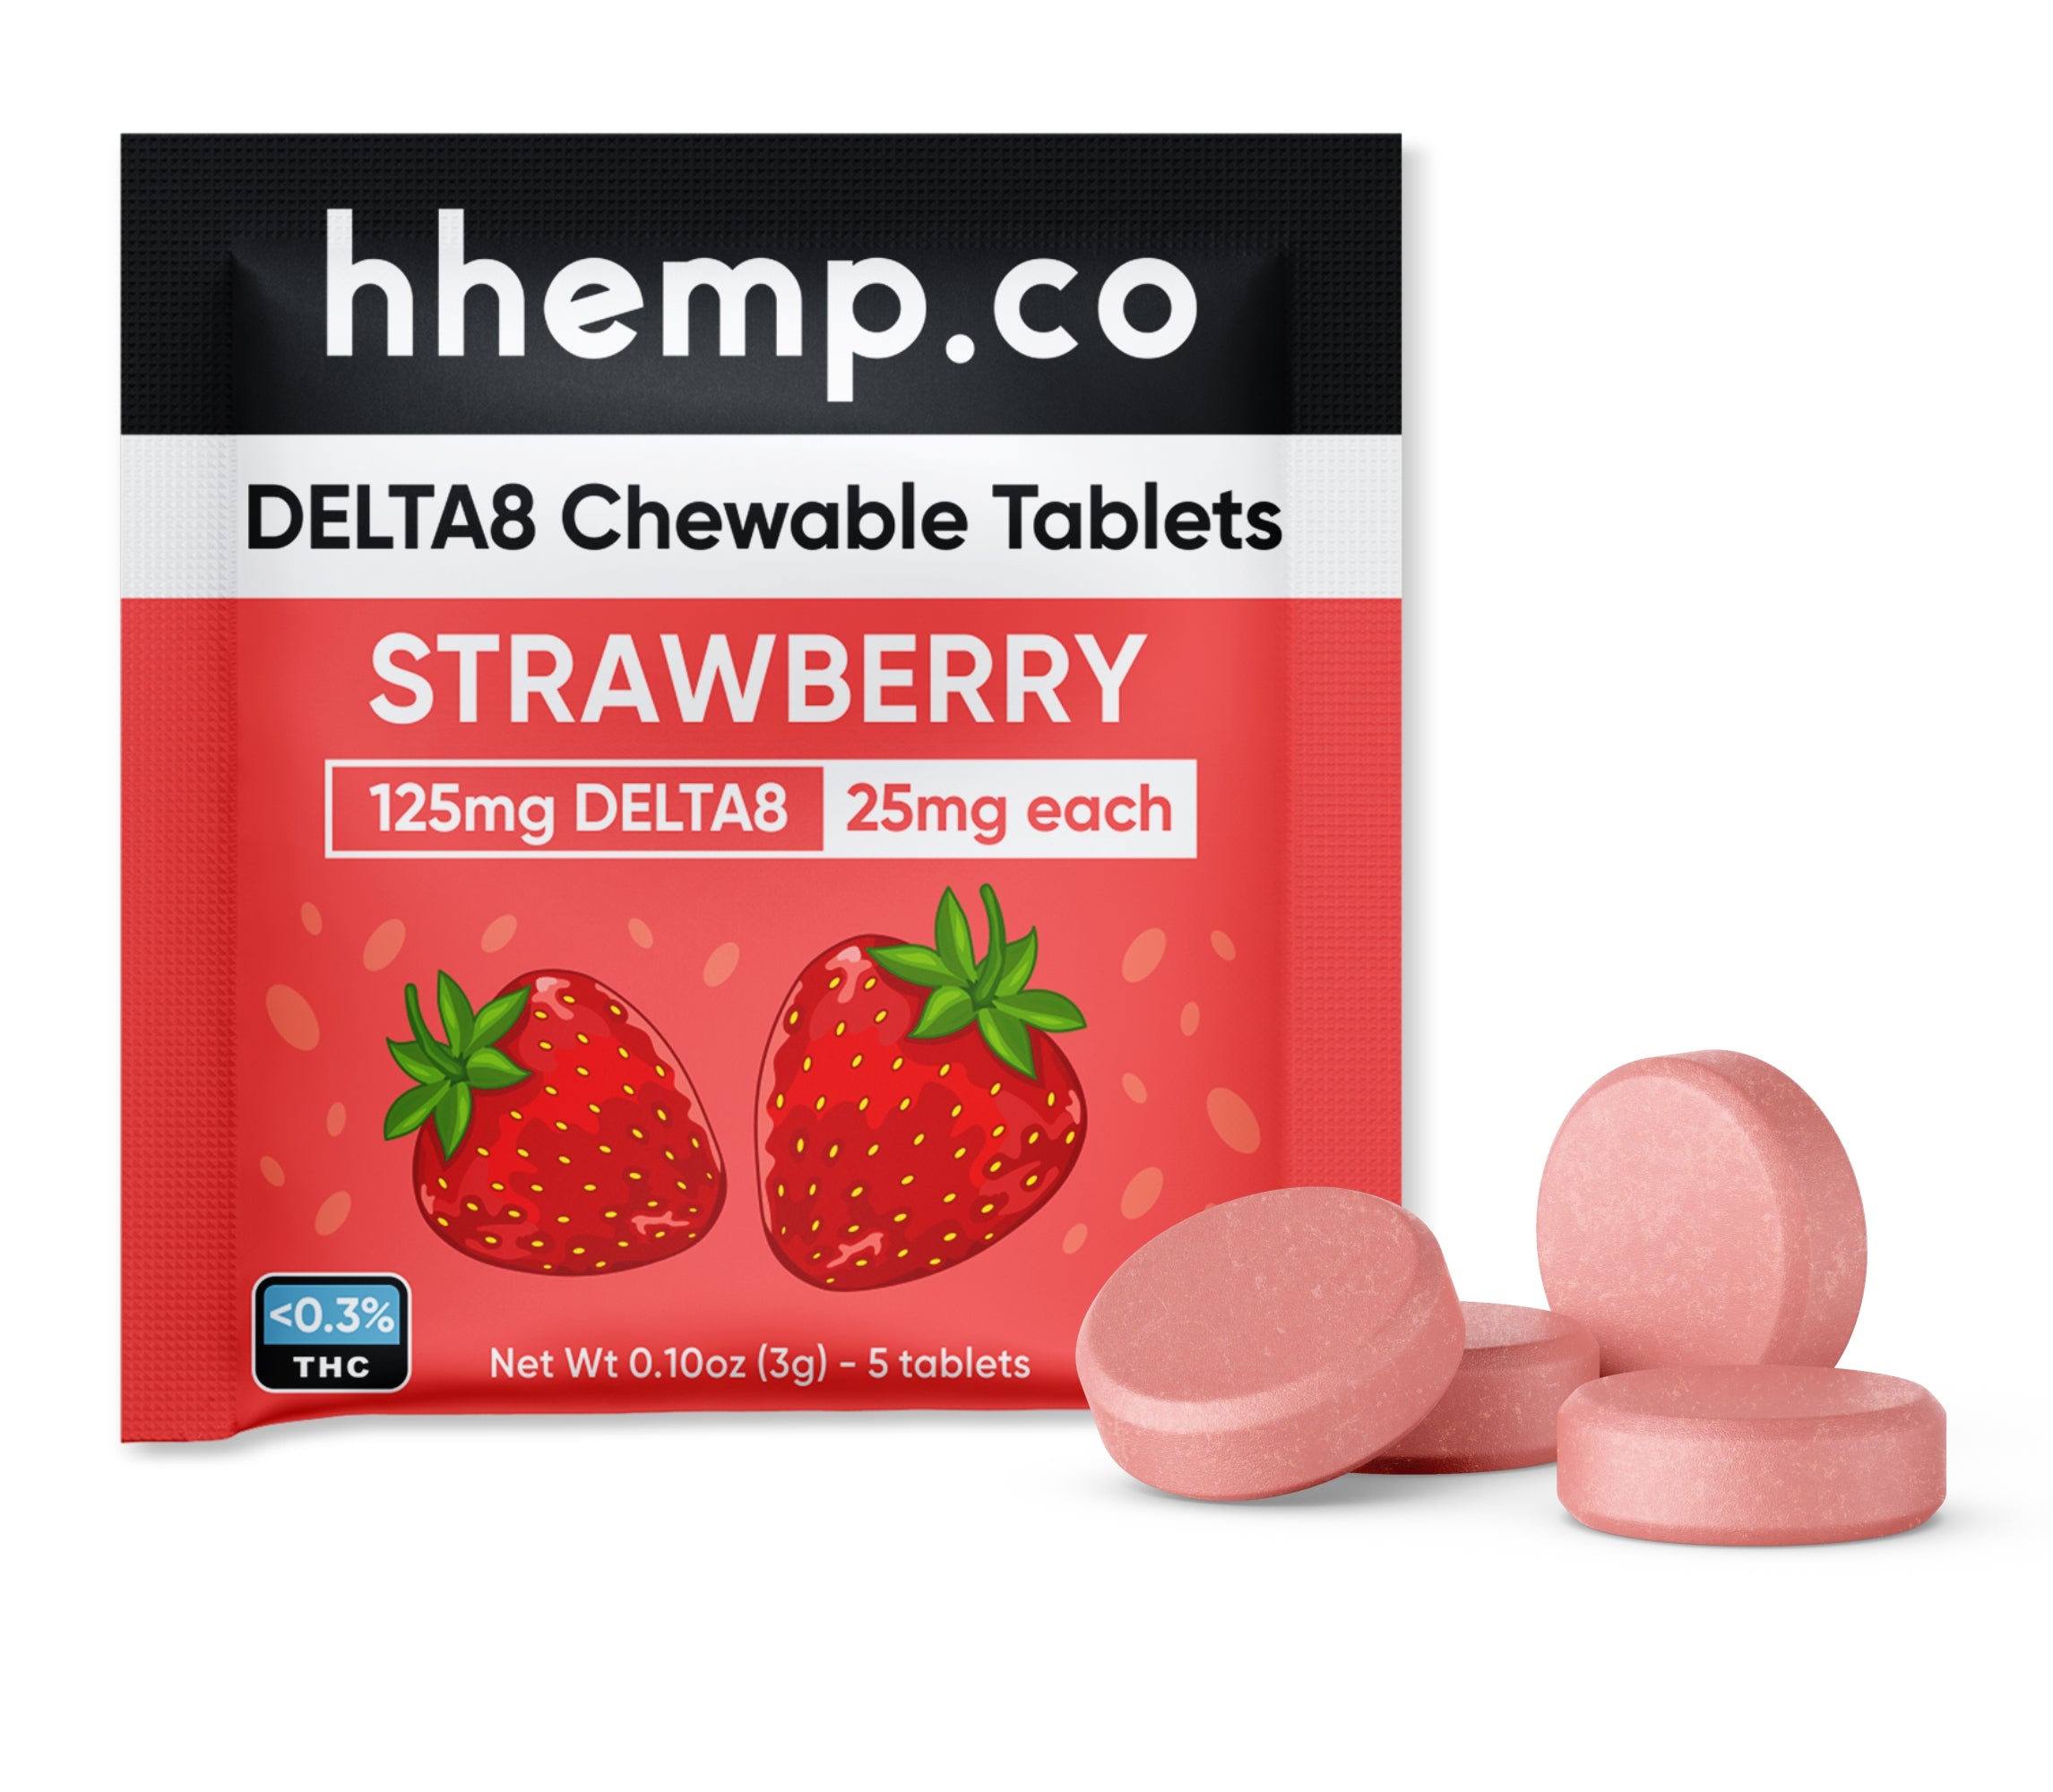 hhemp.co Delta 8 Chewable - Strawberry